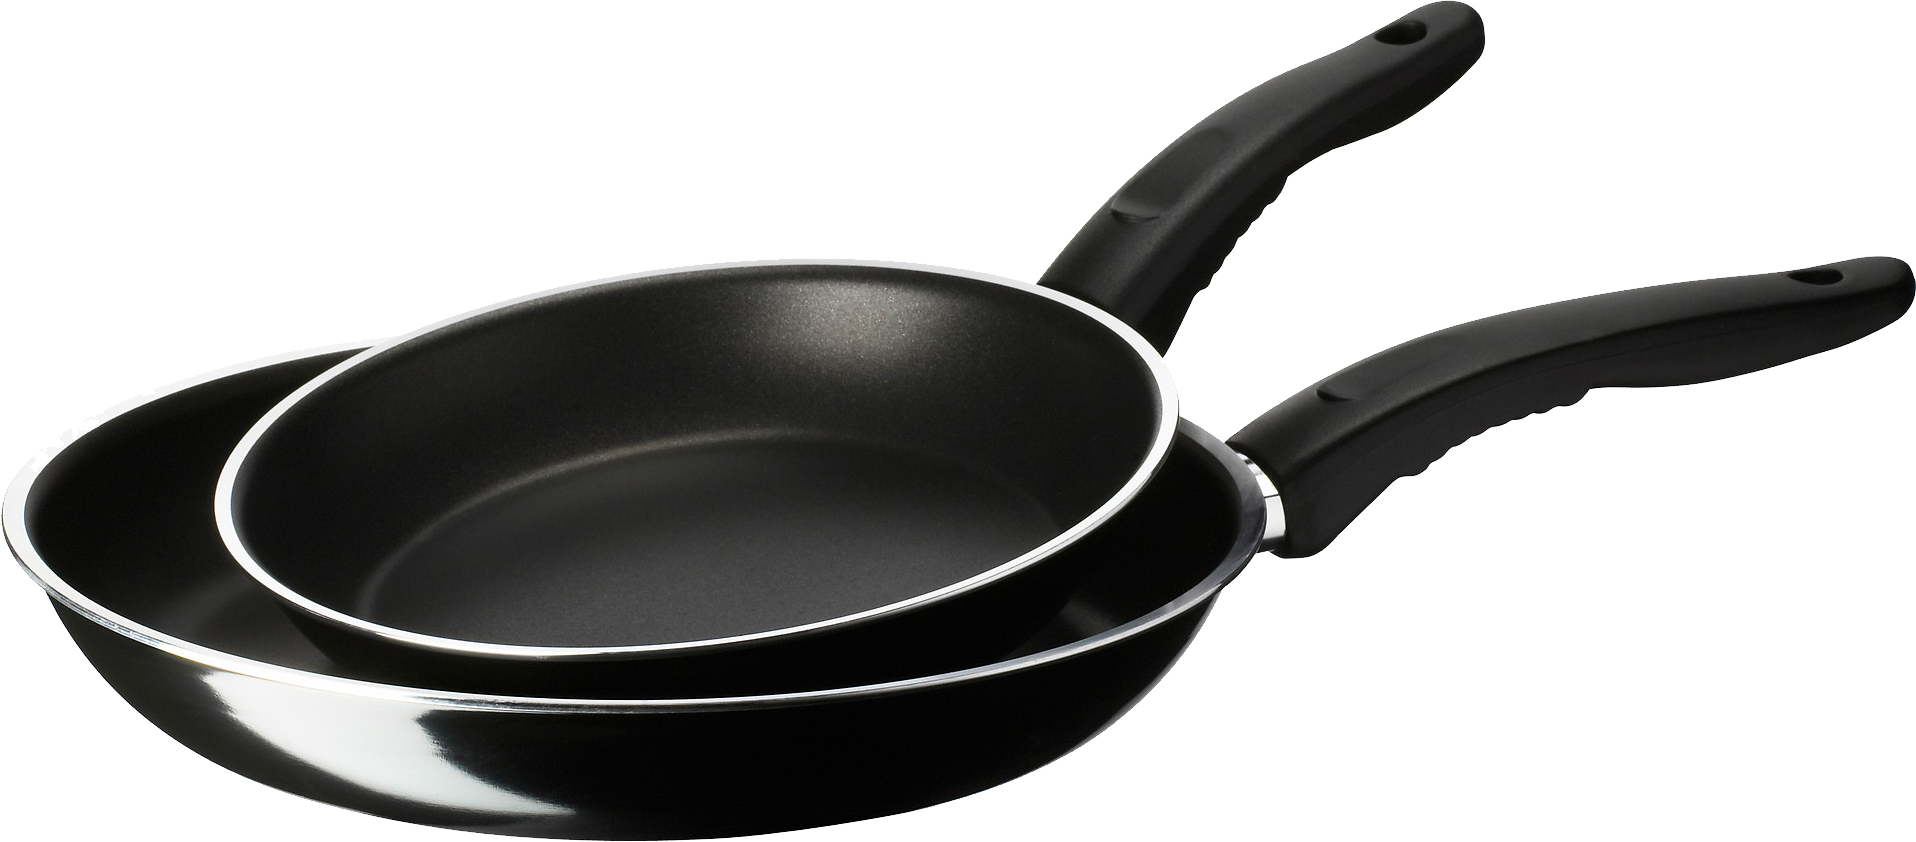 Black Nonstick Frying Pans PNG image